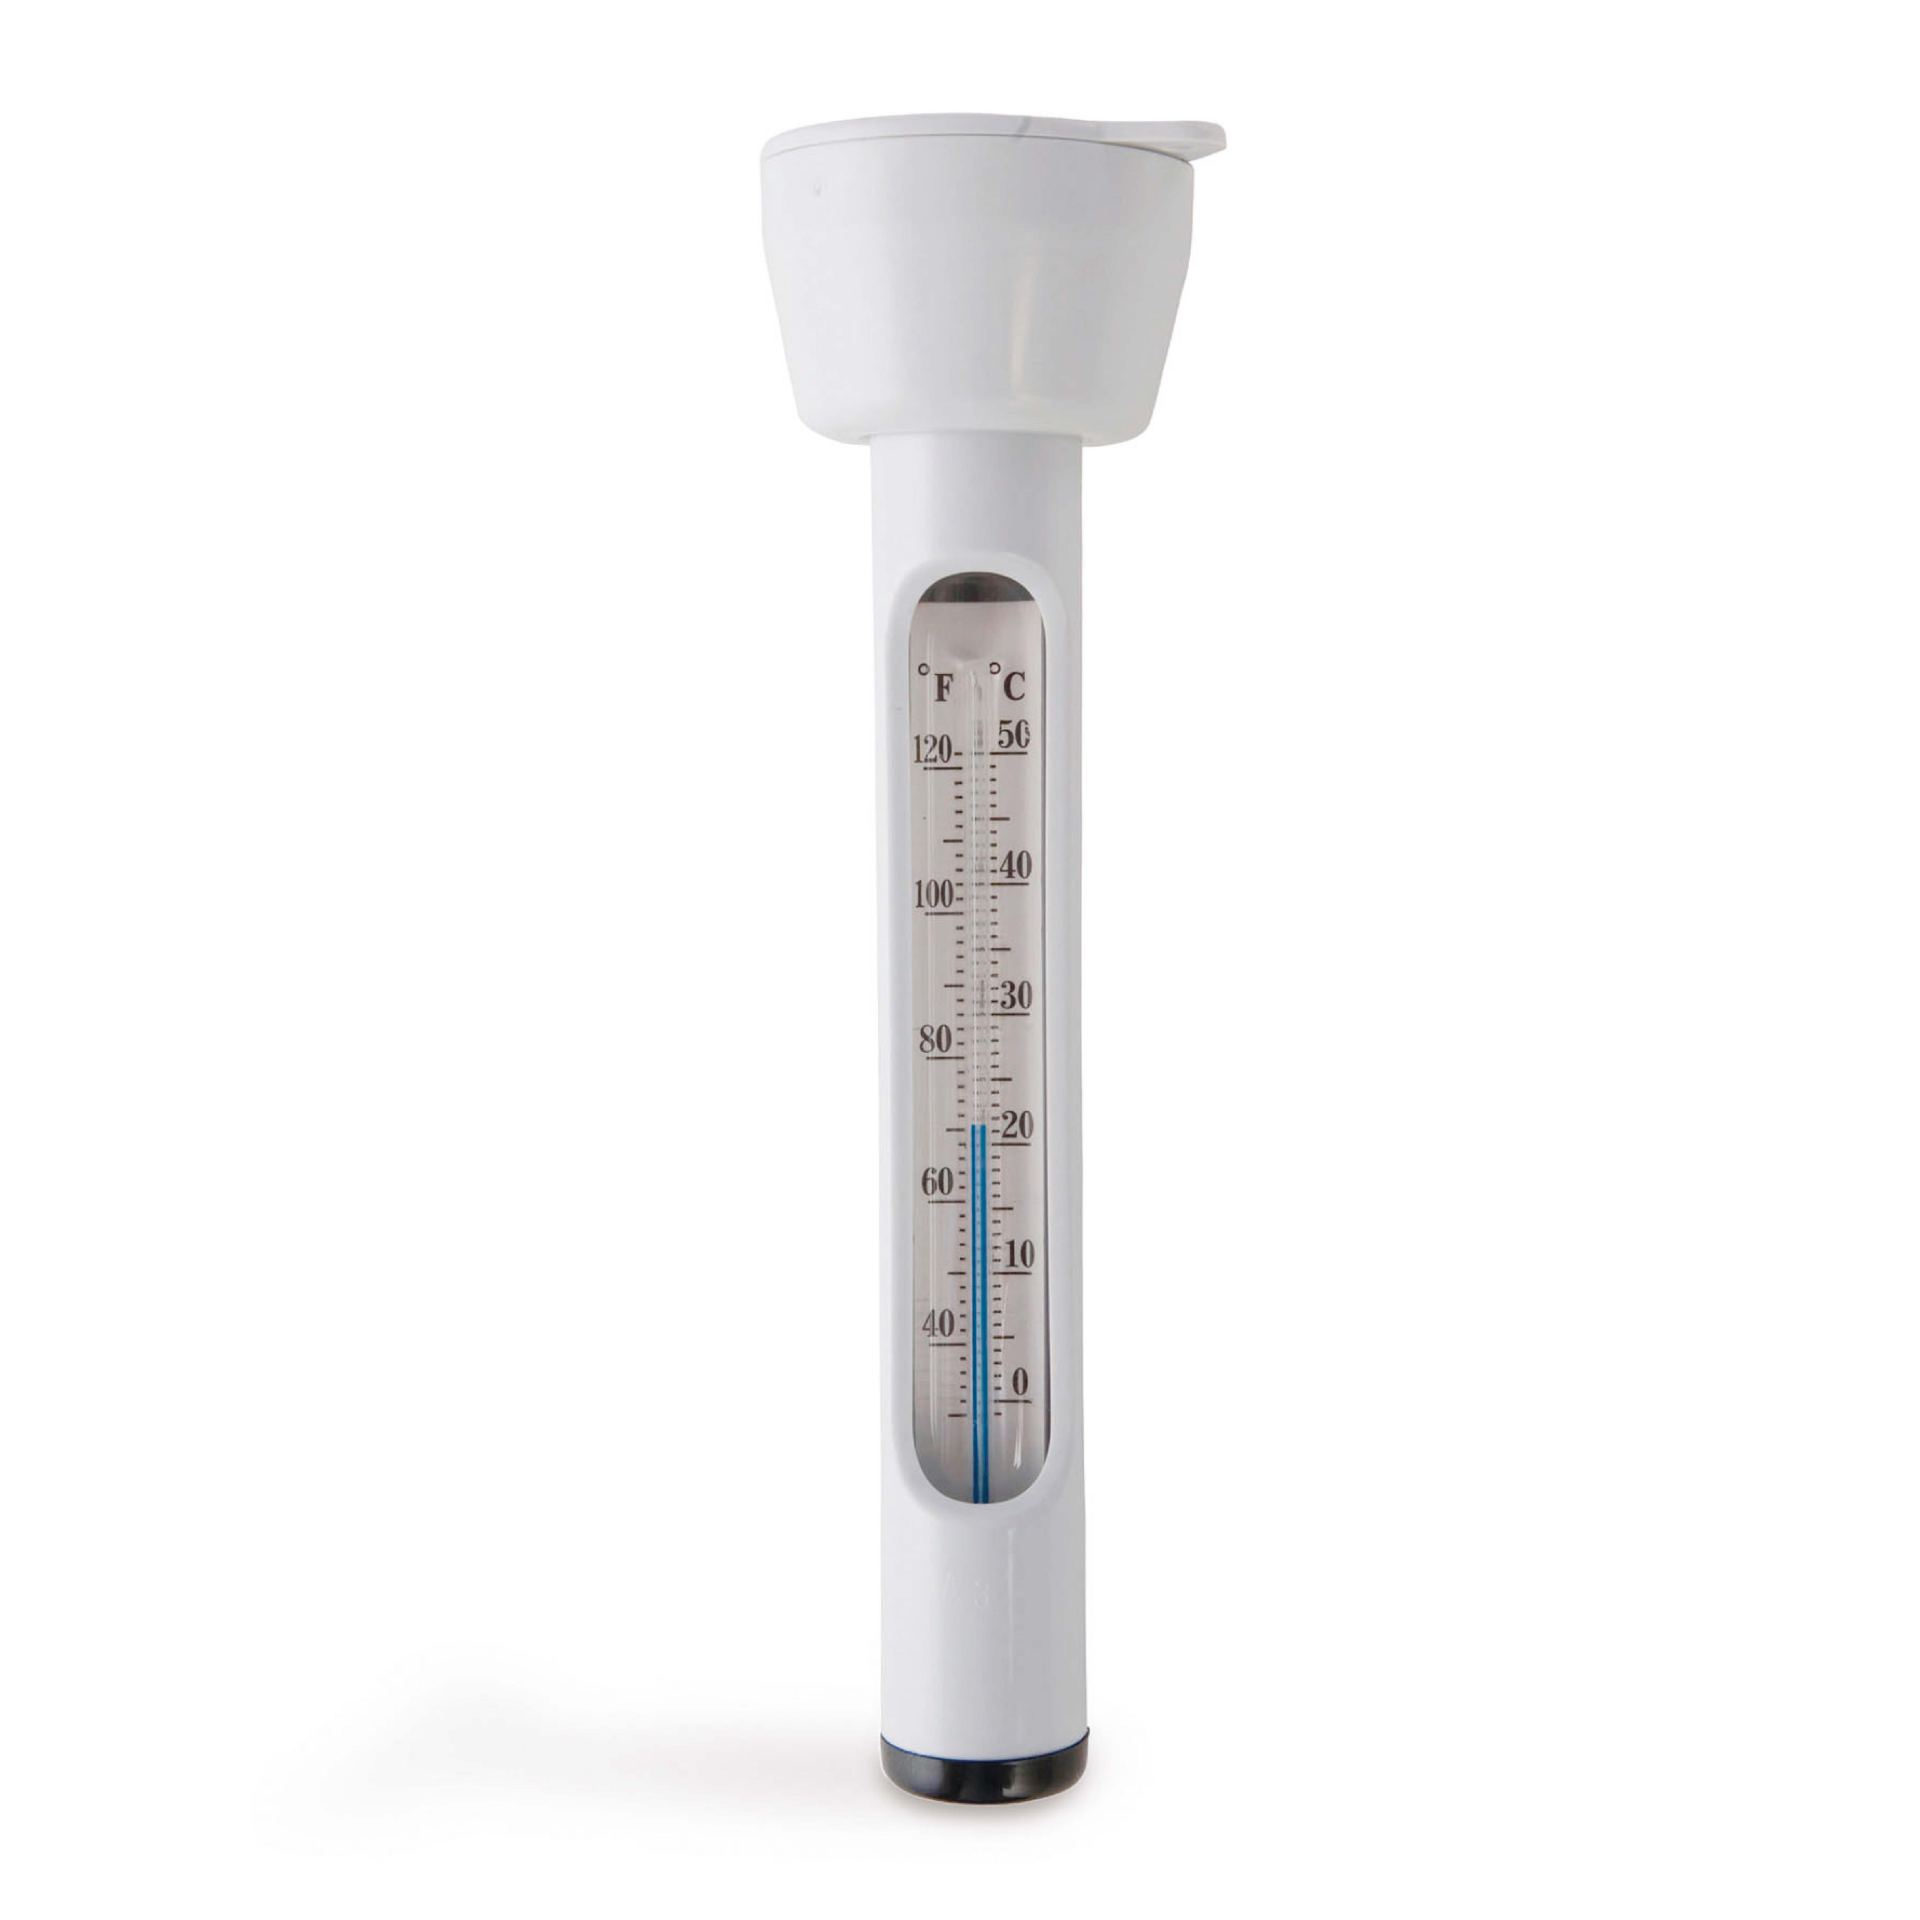 Intex pool thermometer